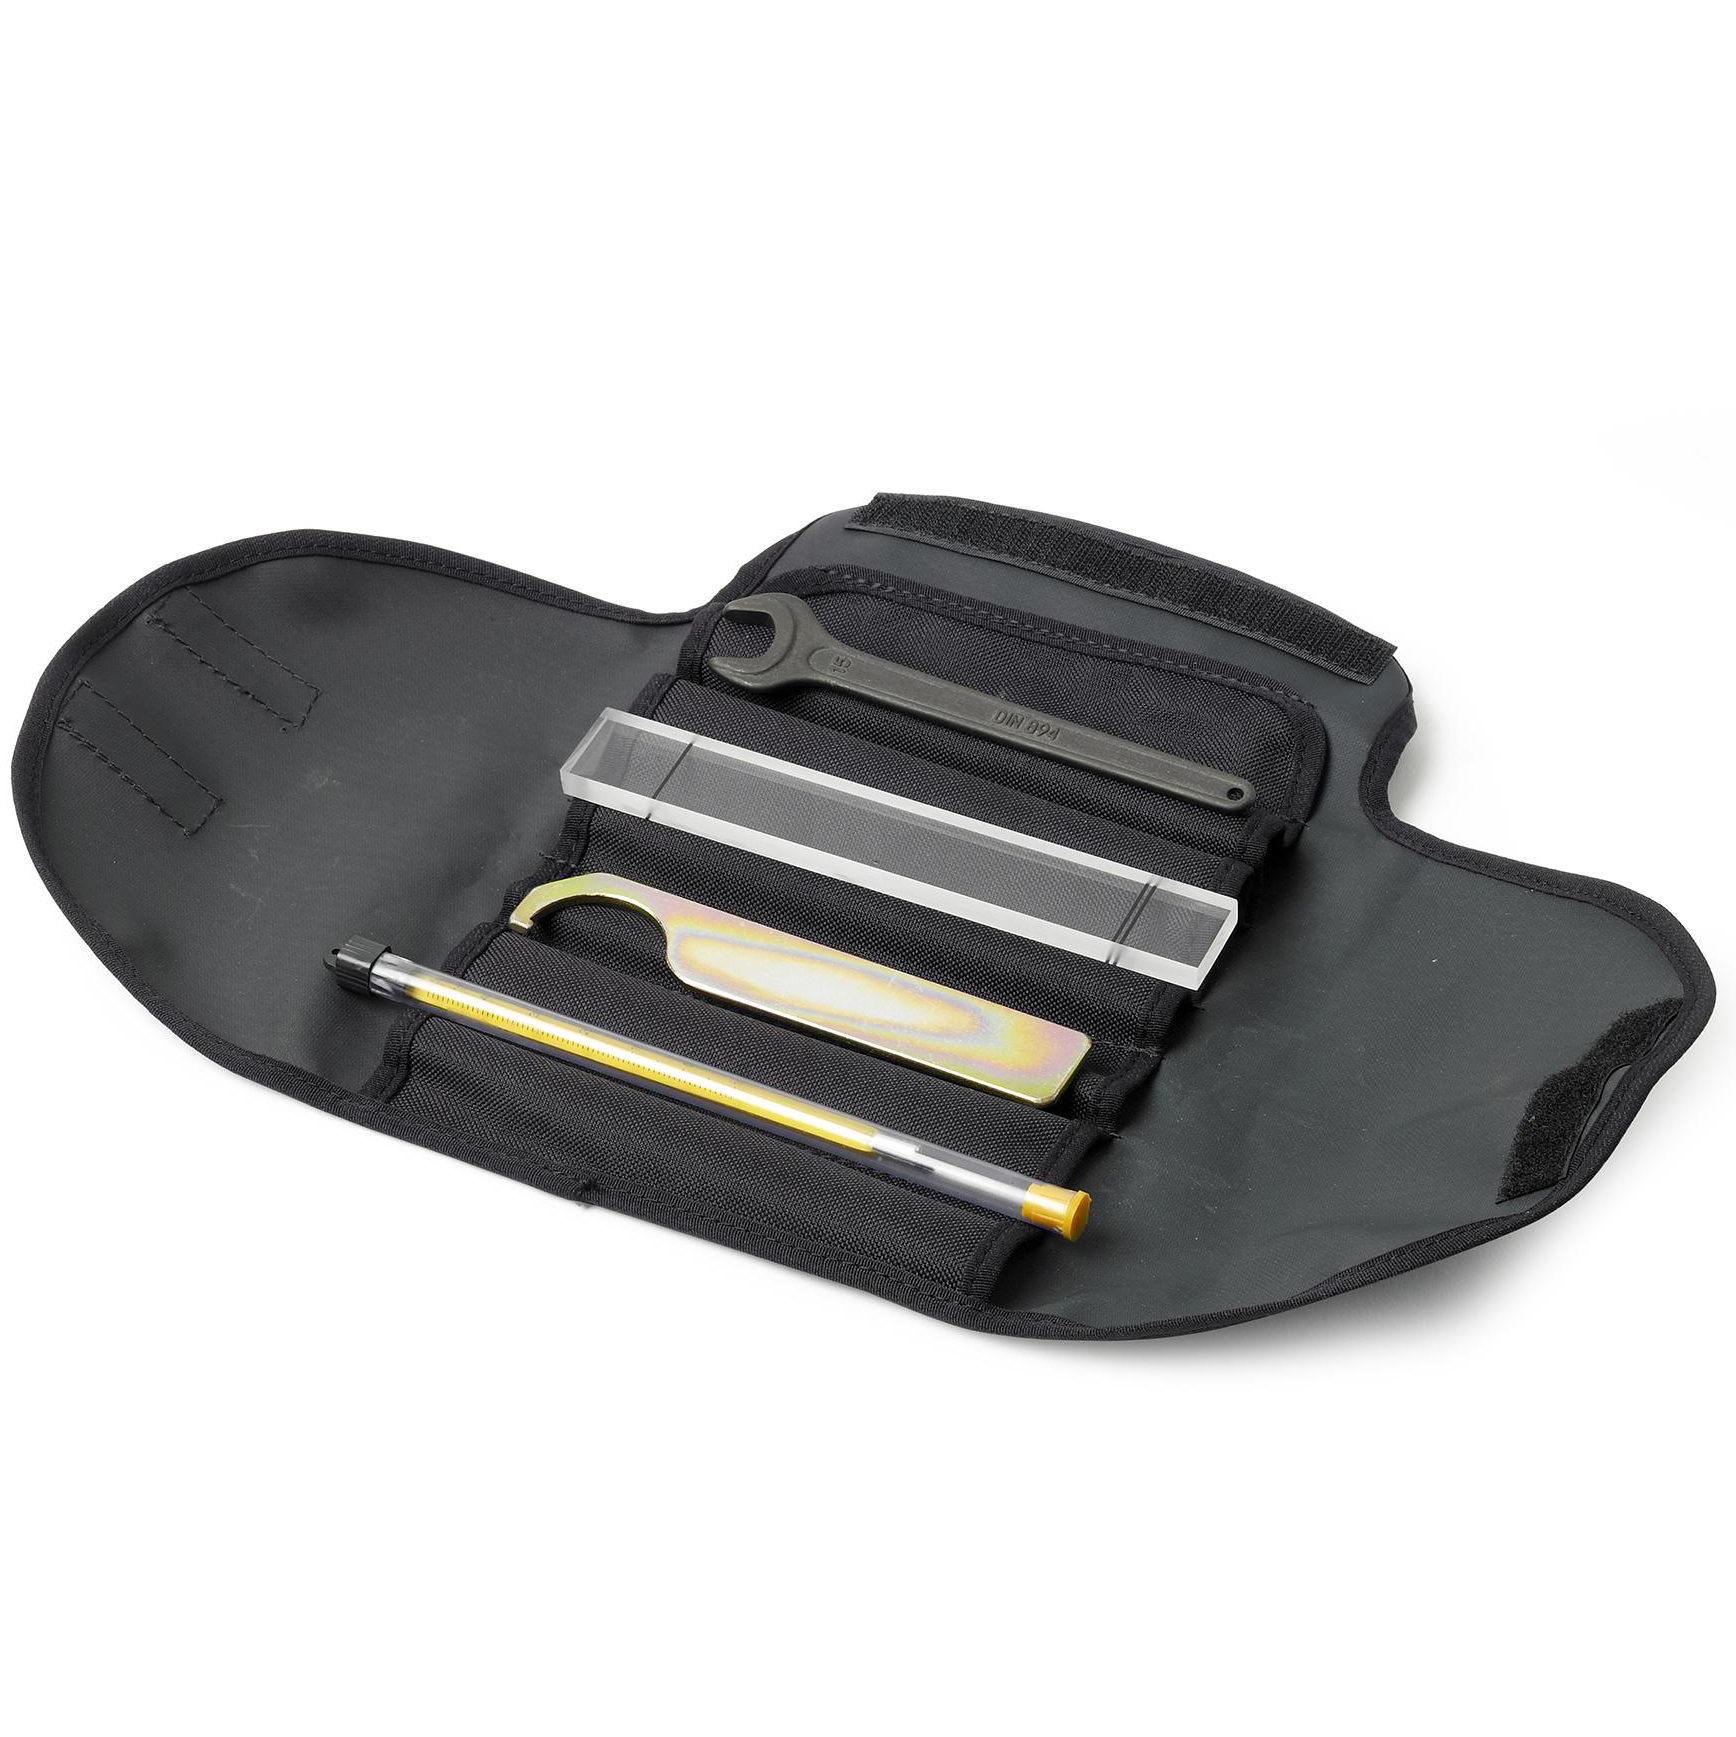 MUN SX1704 Tools wallet